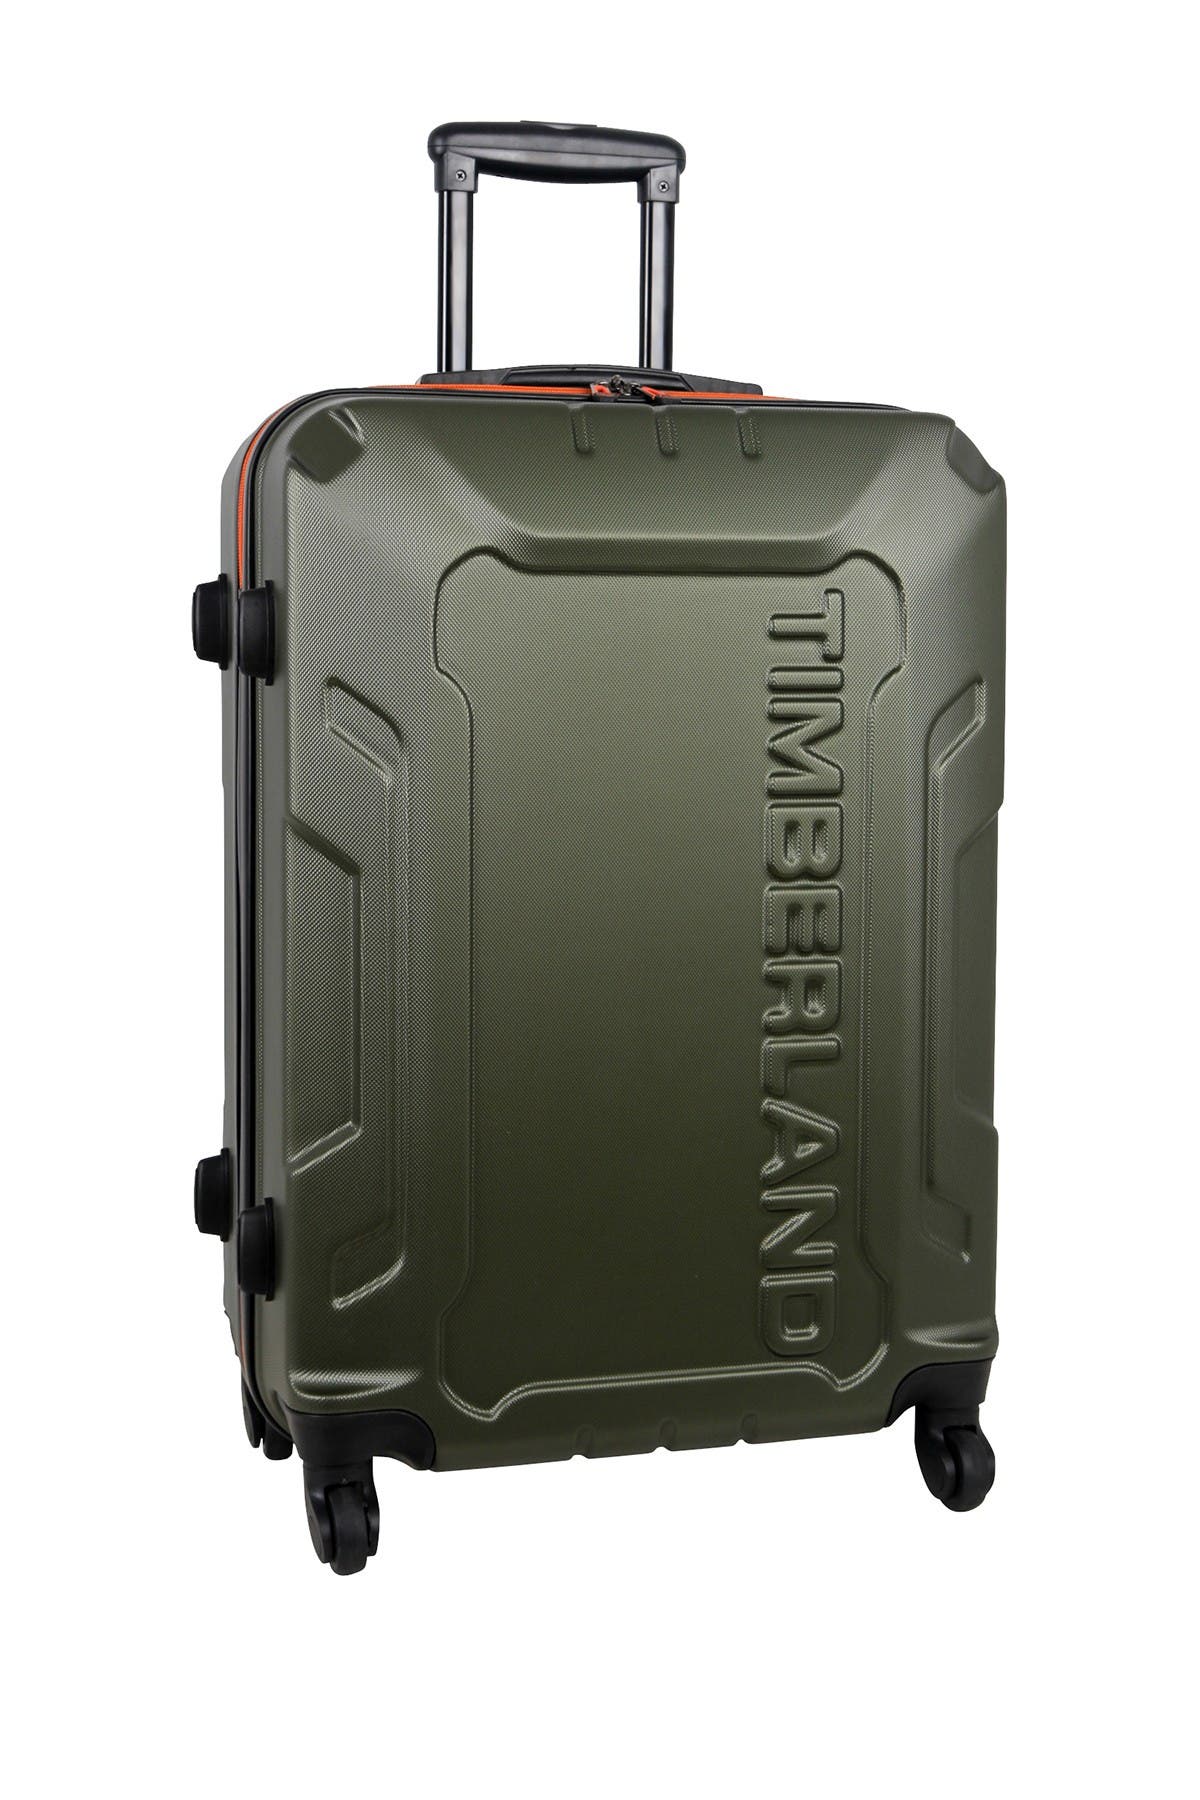 timberland bondcliff luggage